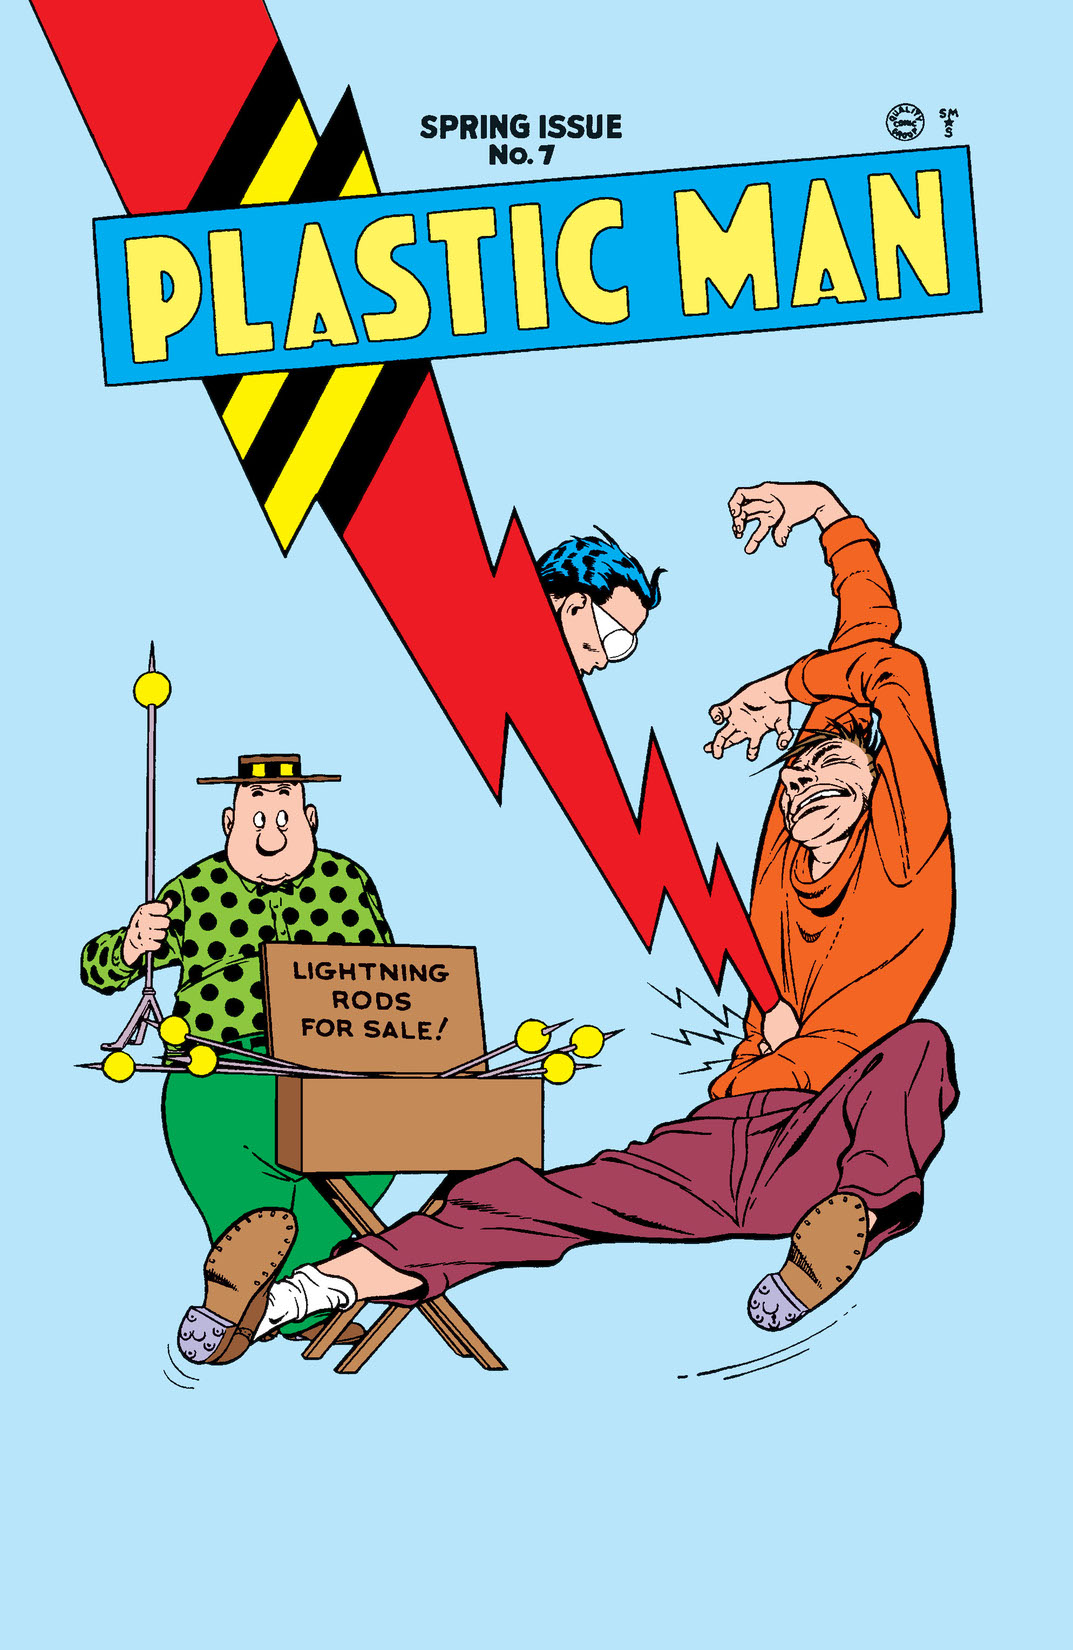 Plastic Man (1943-) #7 preview images